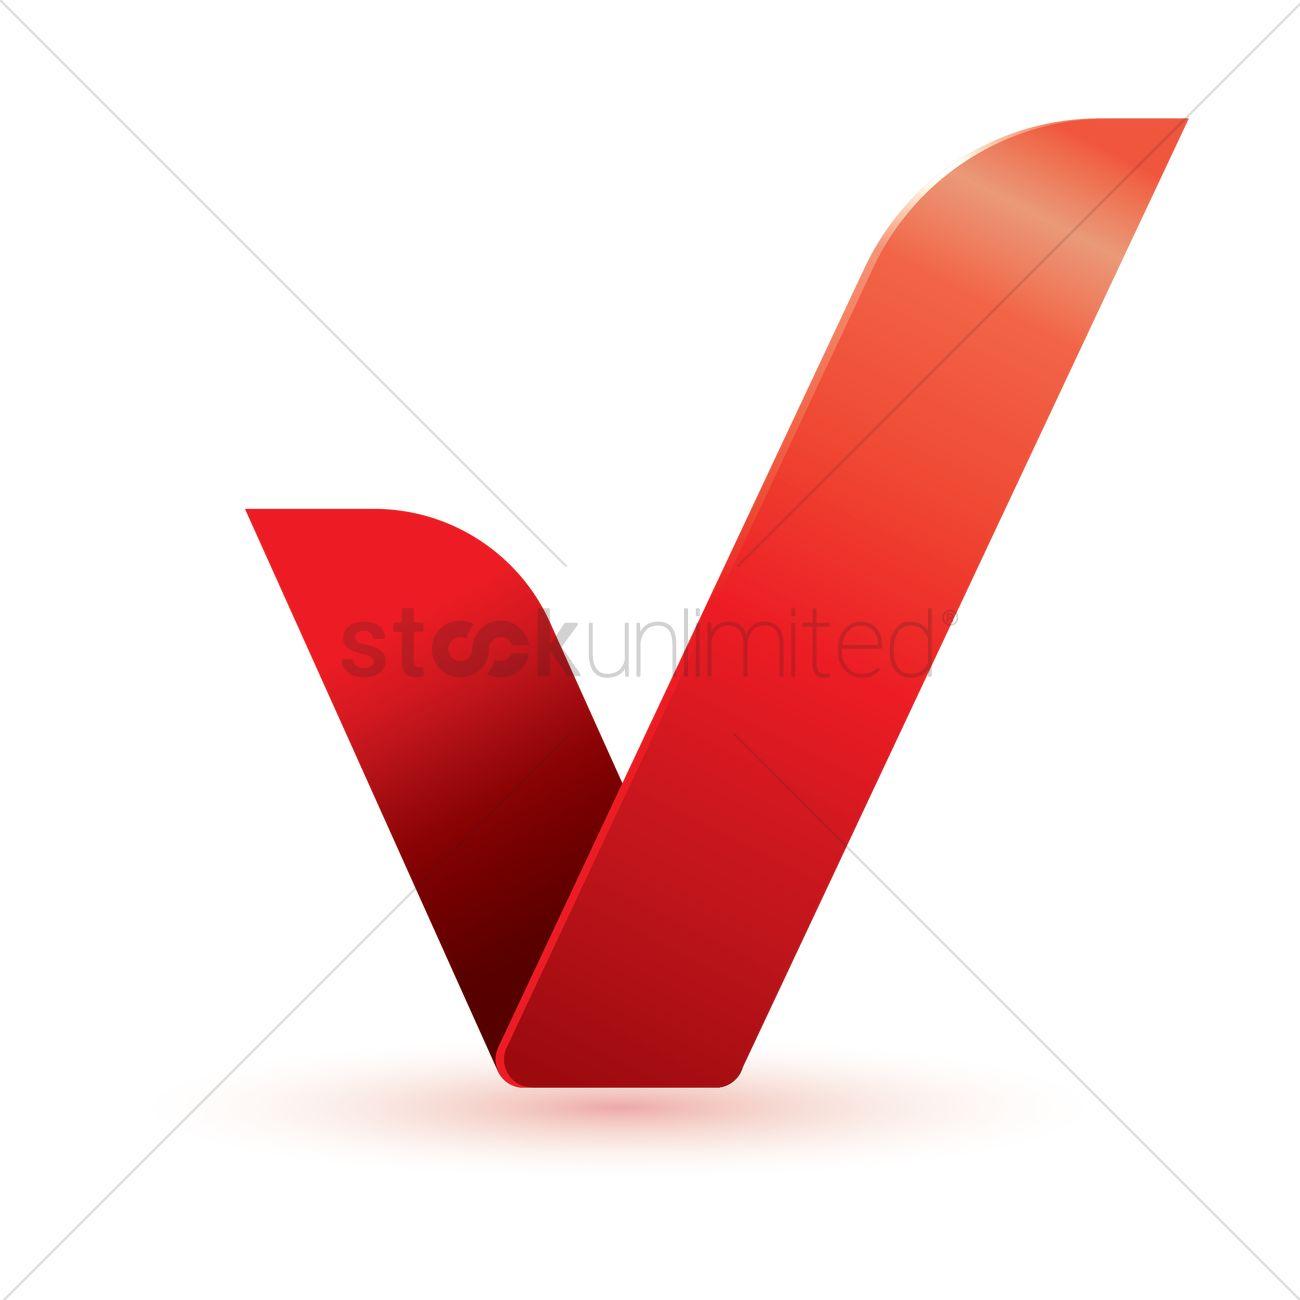 Tick Mark Logo - Checkmark logo element Vector Image - 1823428 | StockUnlimited